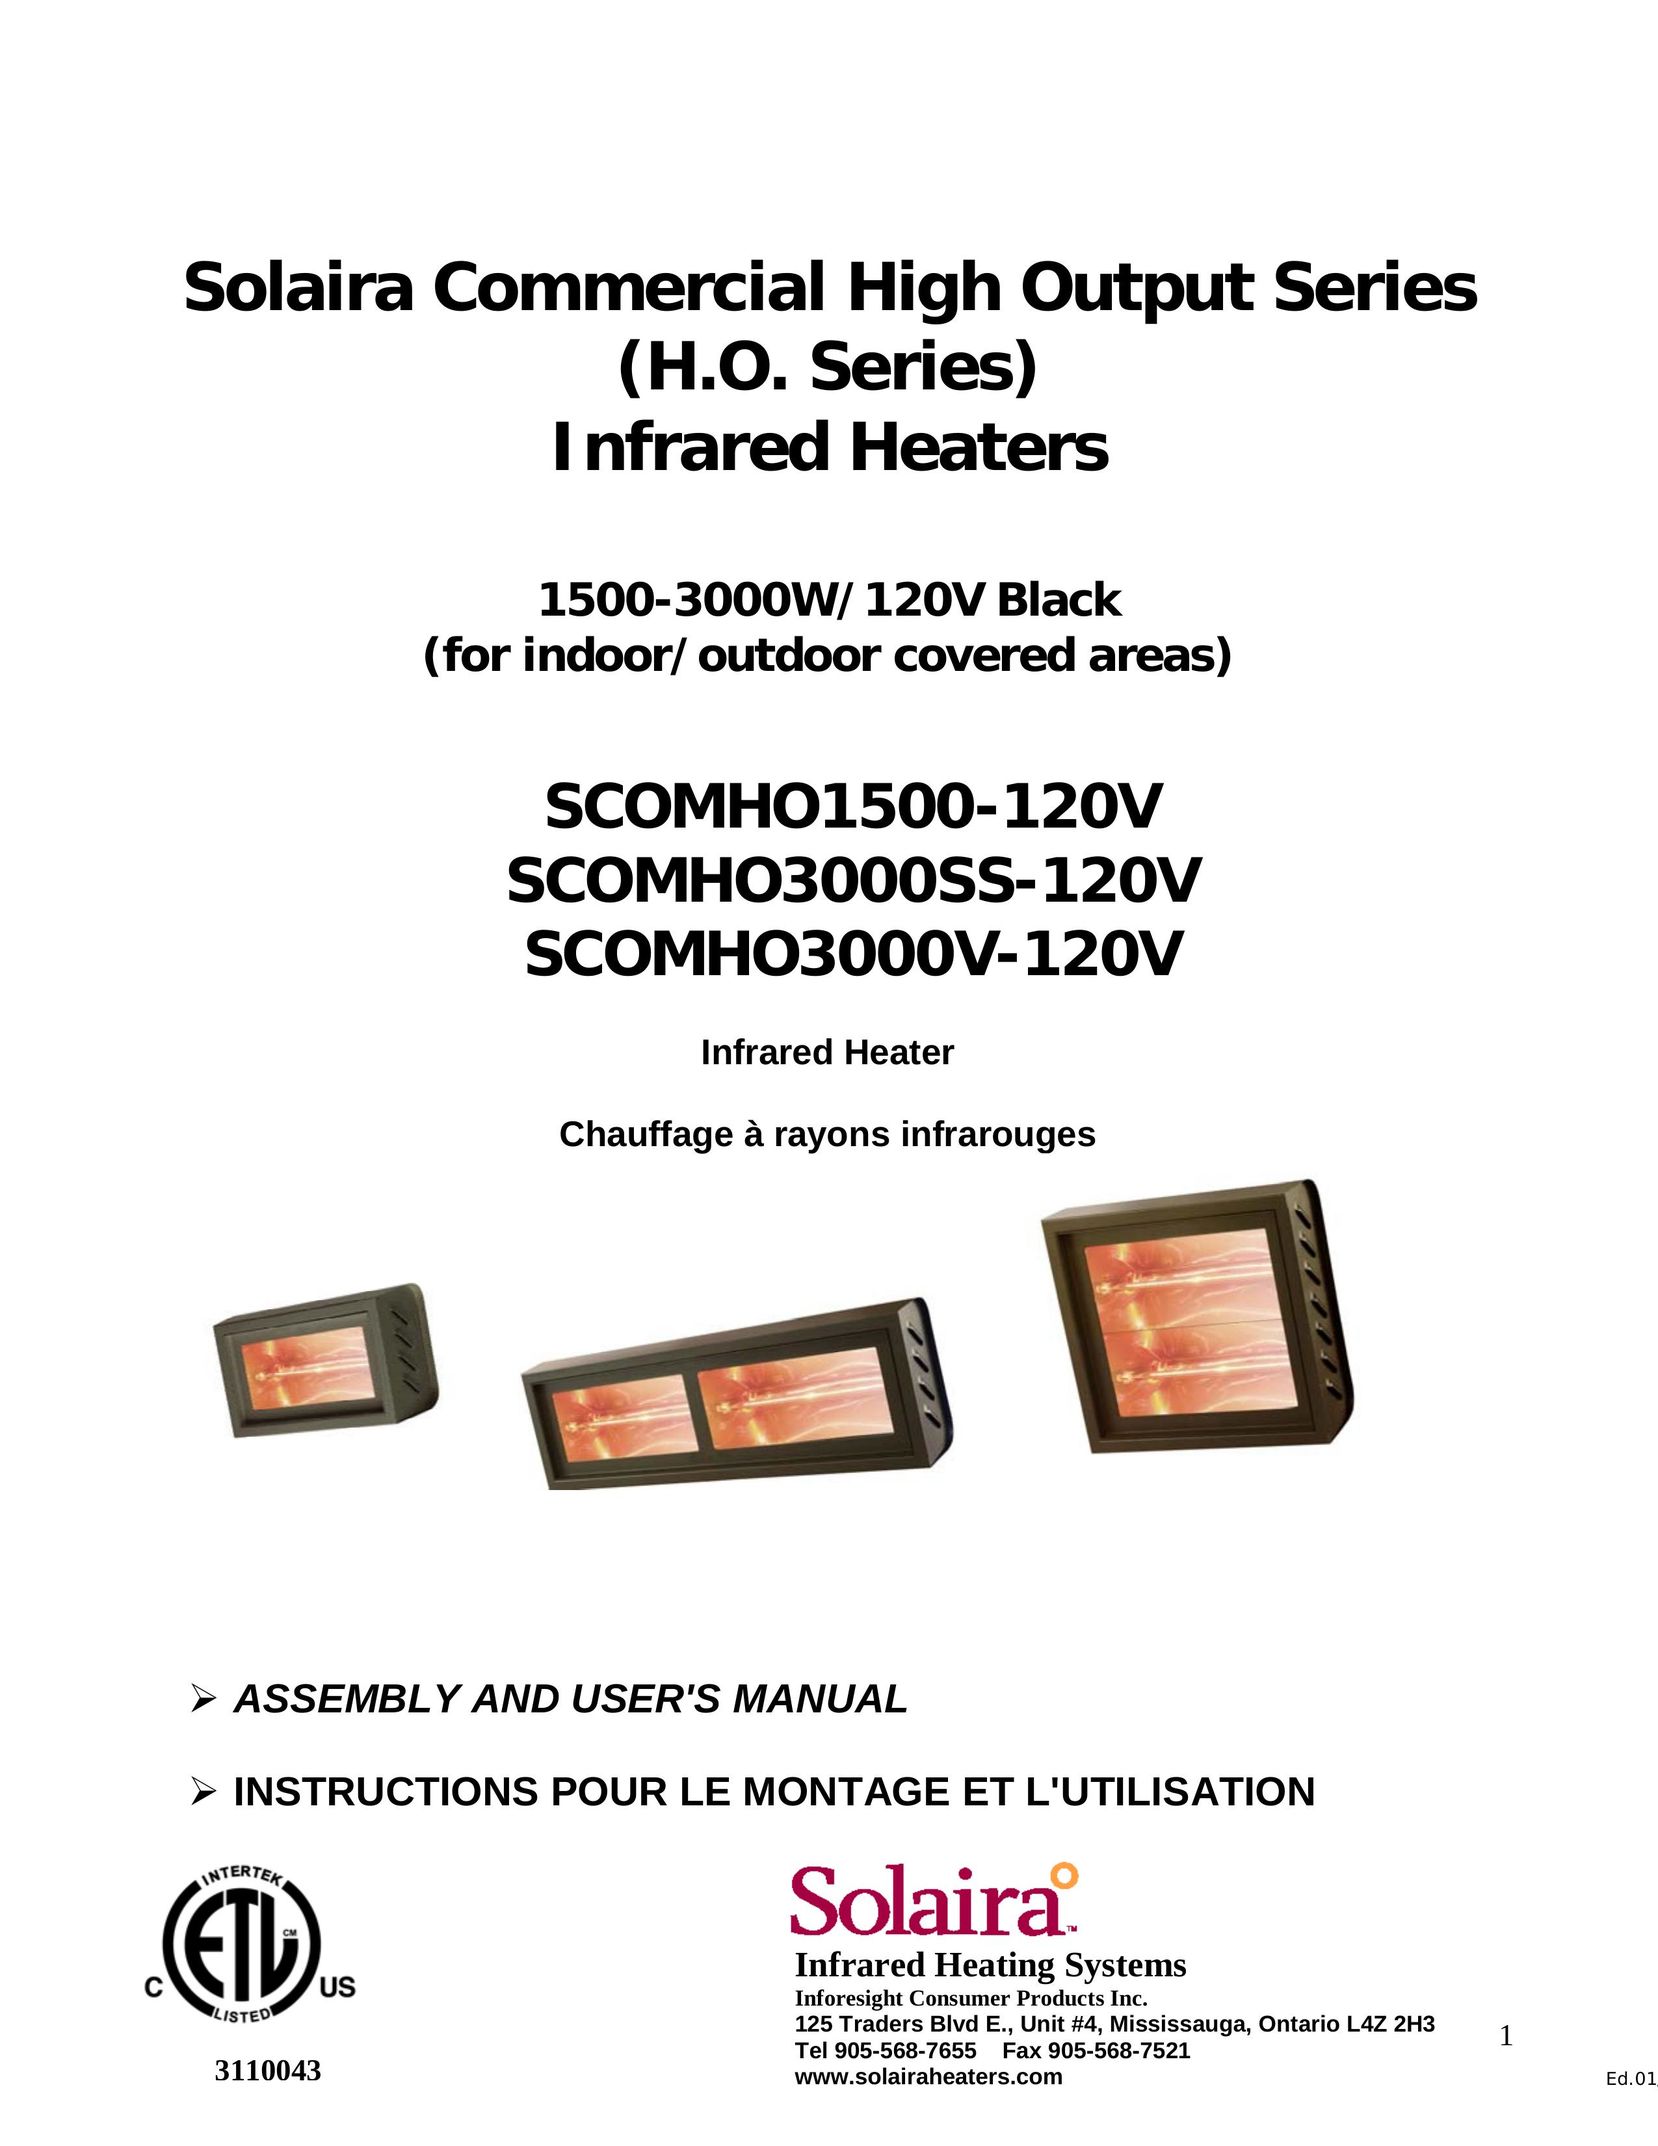 Solaira SCOMHO3000V Electric Heater User Manual